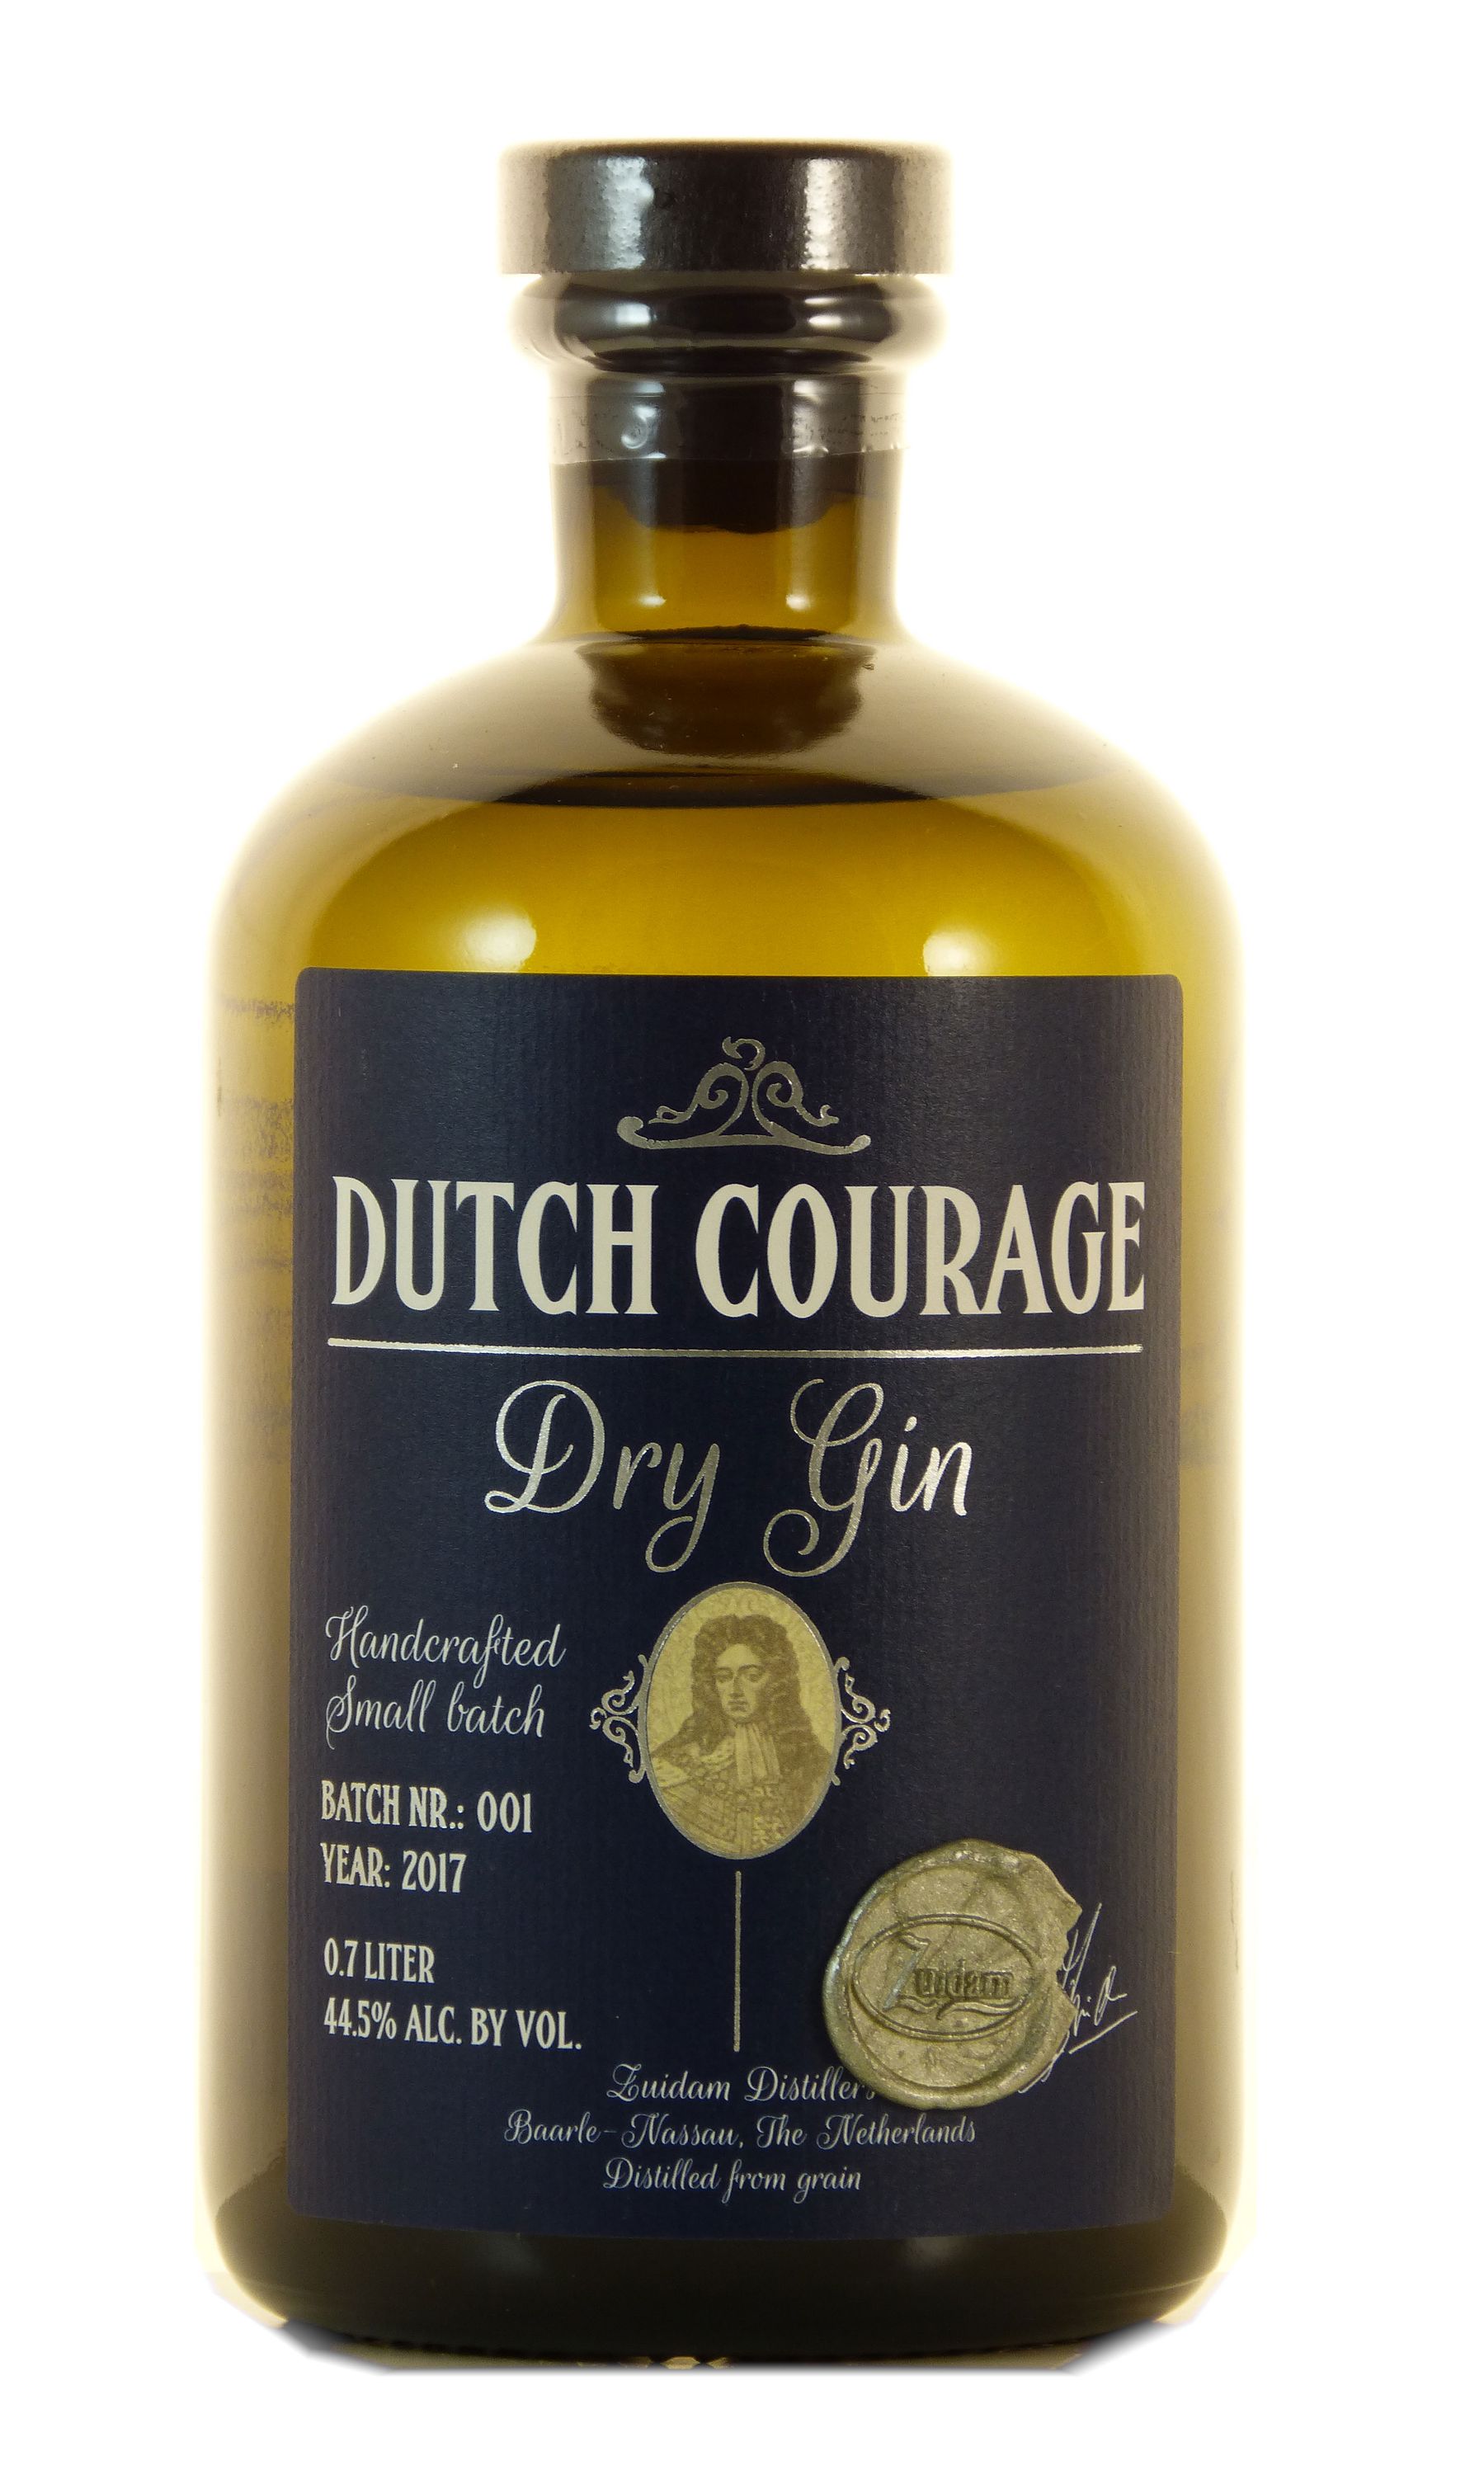 Zuidam Dutch Courage Dry Gin 0,7l, alc. 44.5% by volume